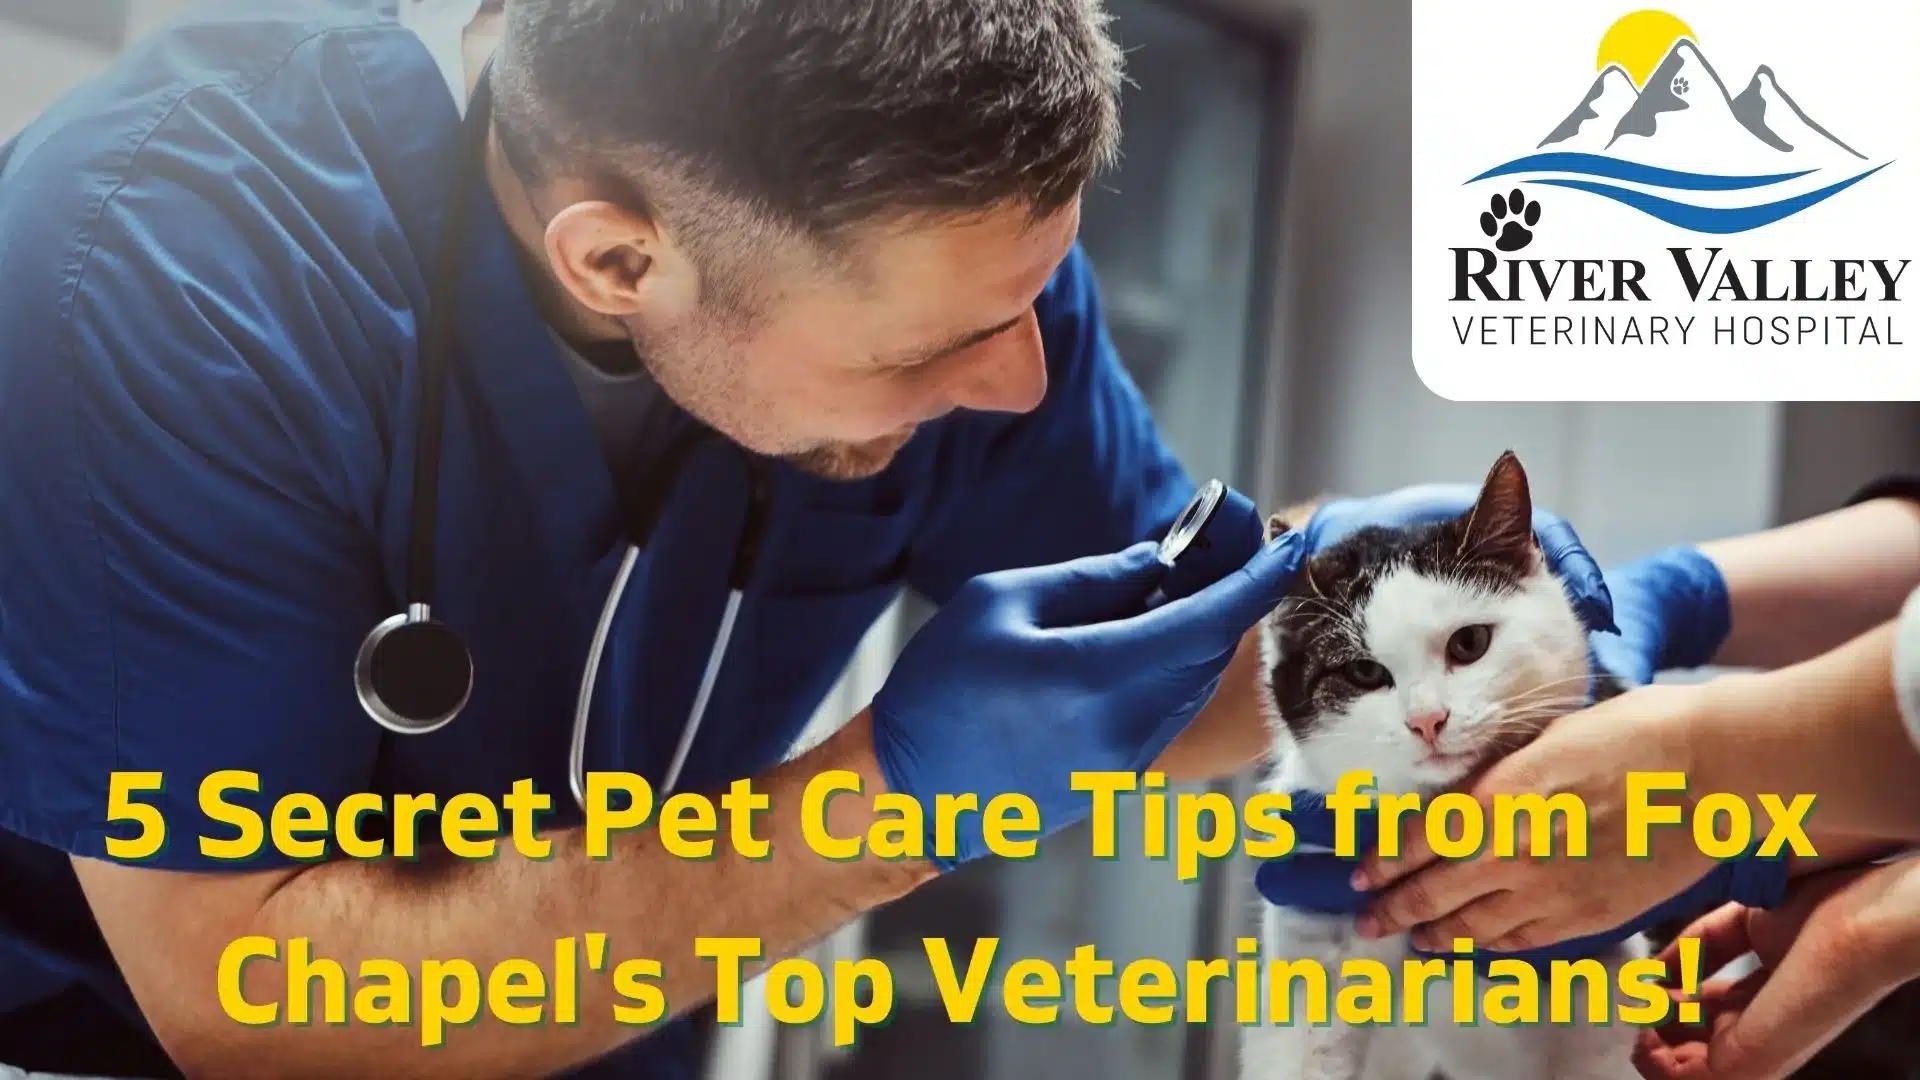 5 Secret Pet Care Tips from Fox Chapel's Top Veterinarians!